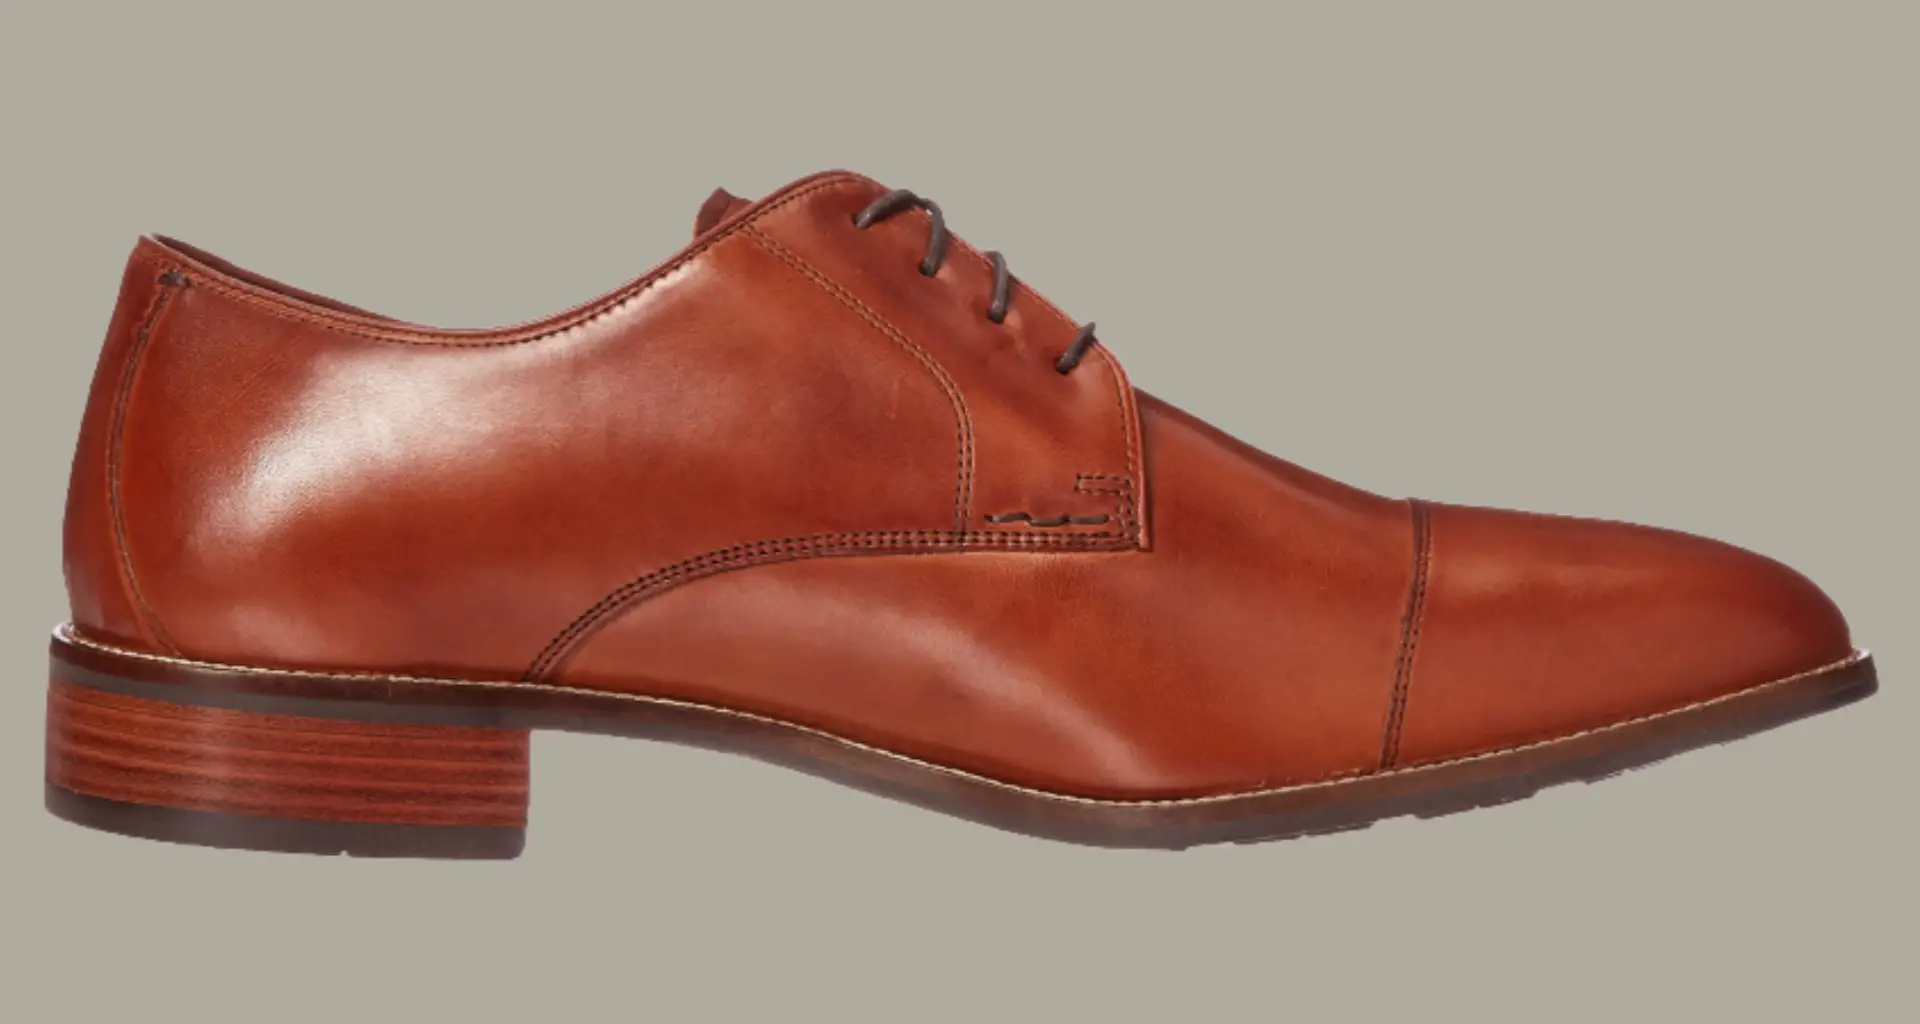 Cap toe dress shoe for men under $100